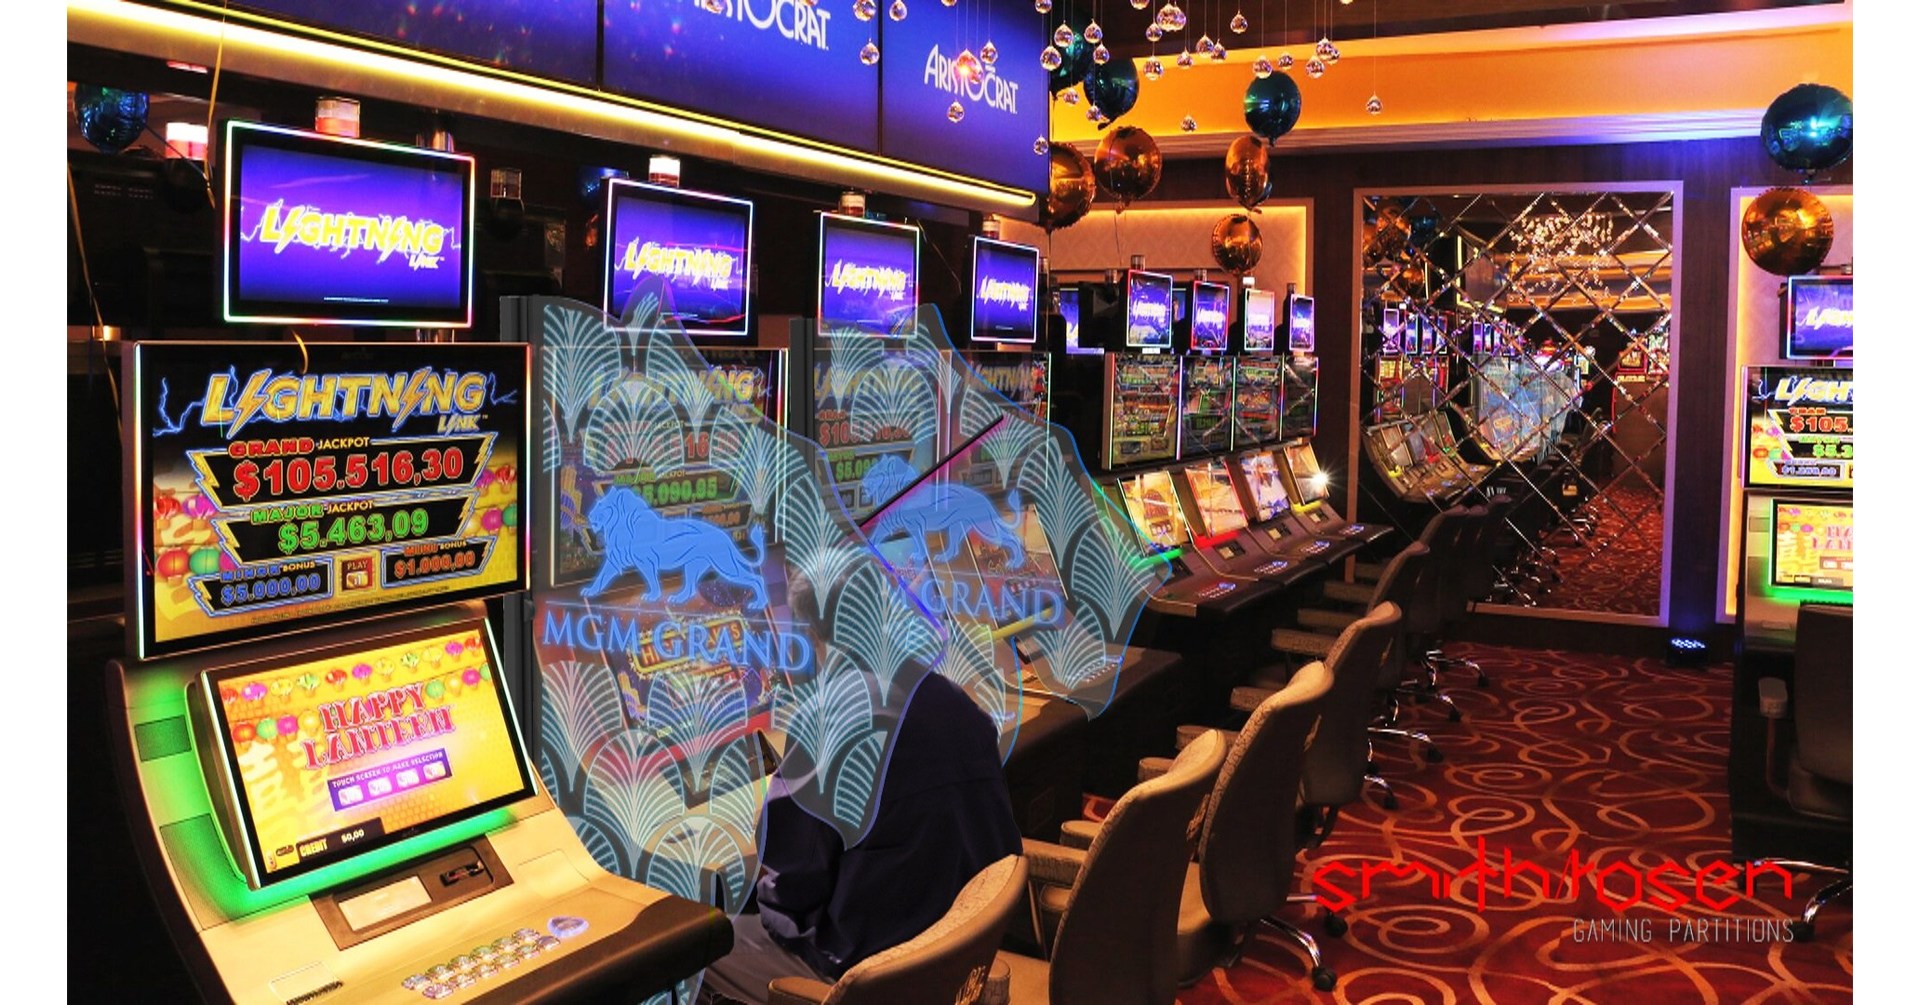 Vegas technology casino software download